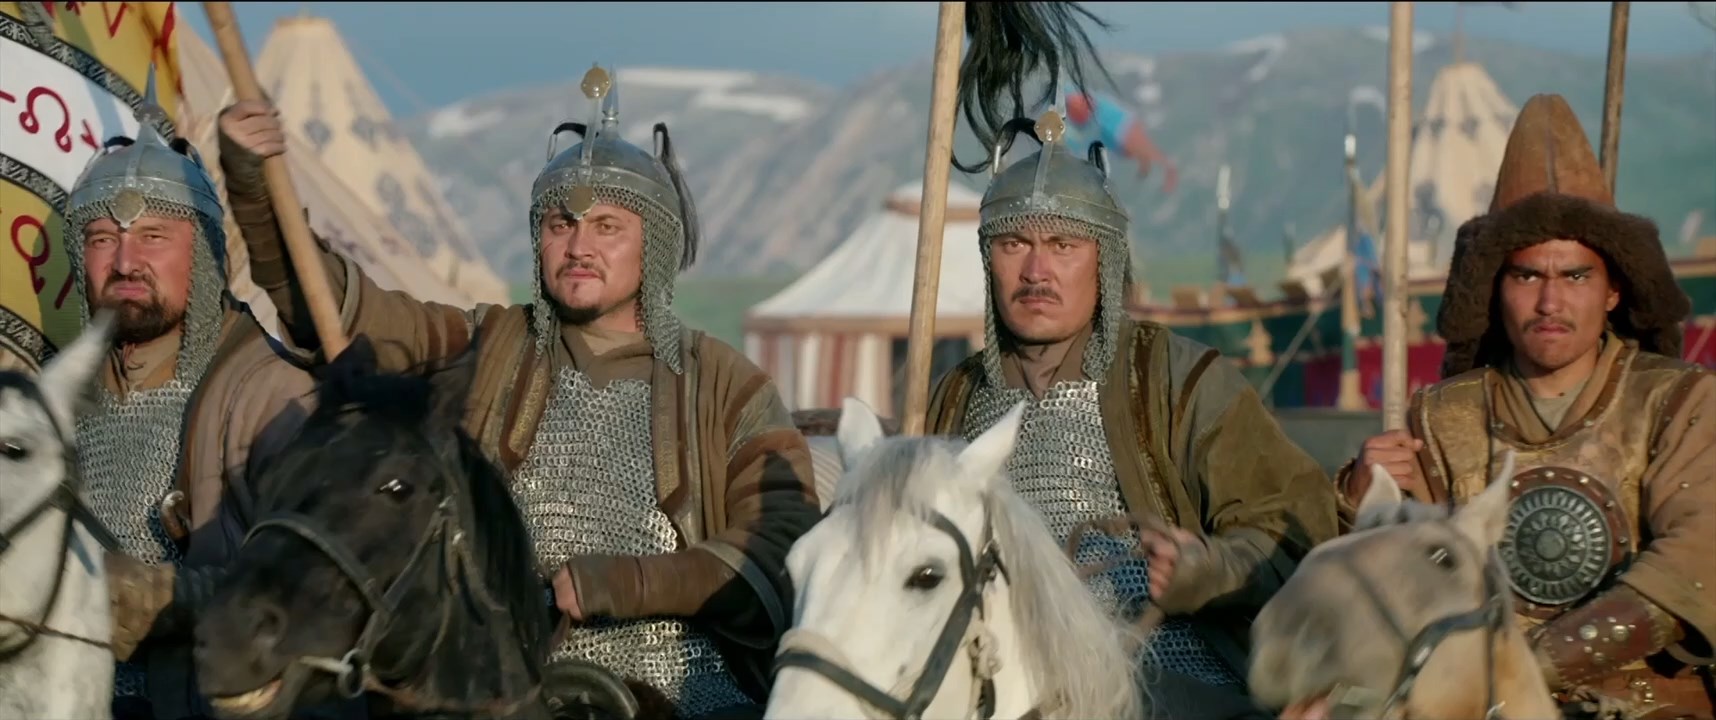 Kazakh-Khanate-The-Golden-Throne-2019-Telugu-Dubbed-Movie-Screen-Shot-4.jpeg